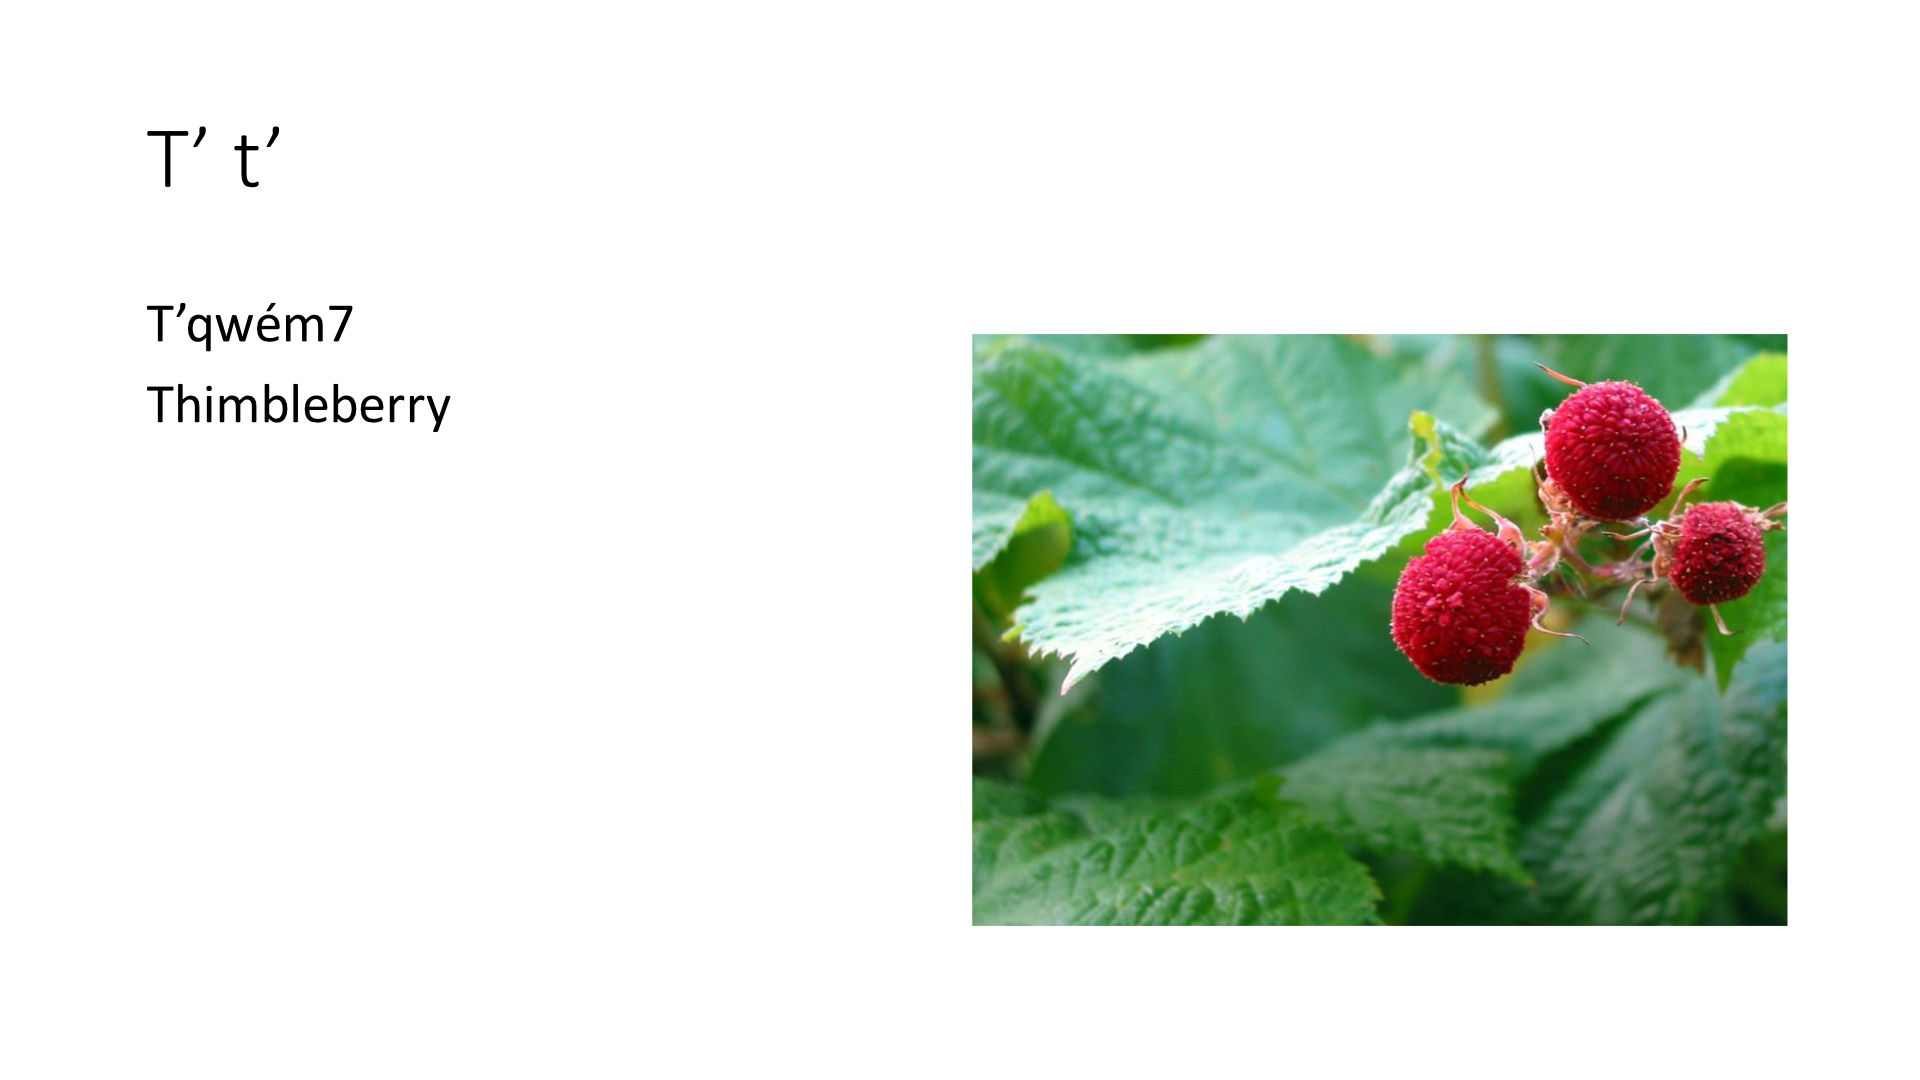 Photograph of a thimbleberry